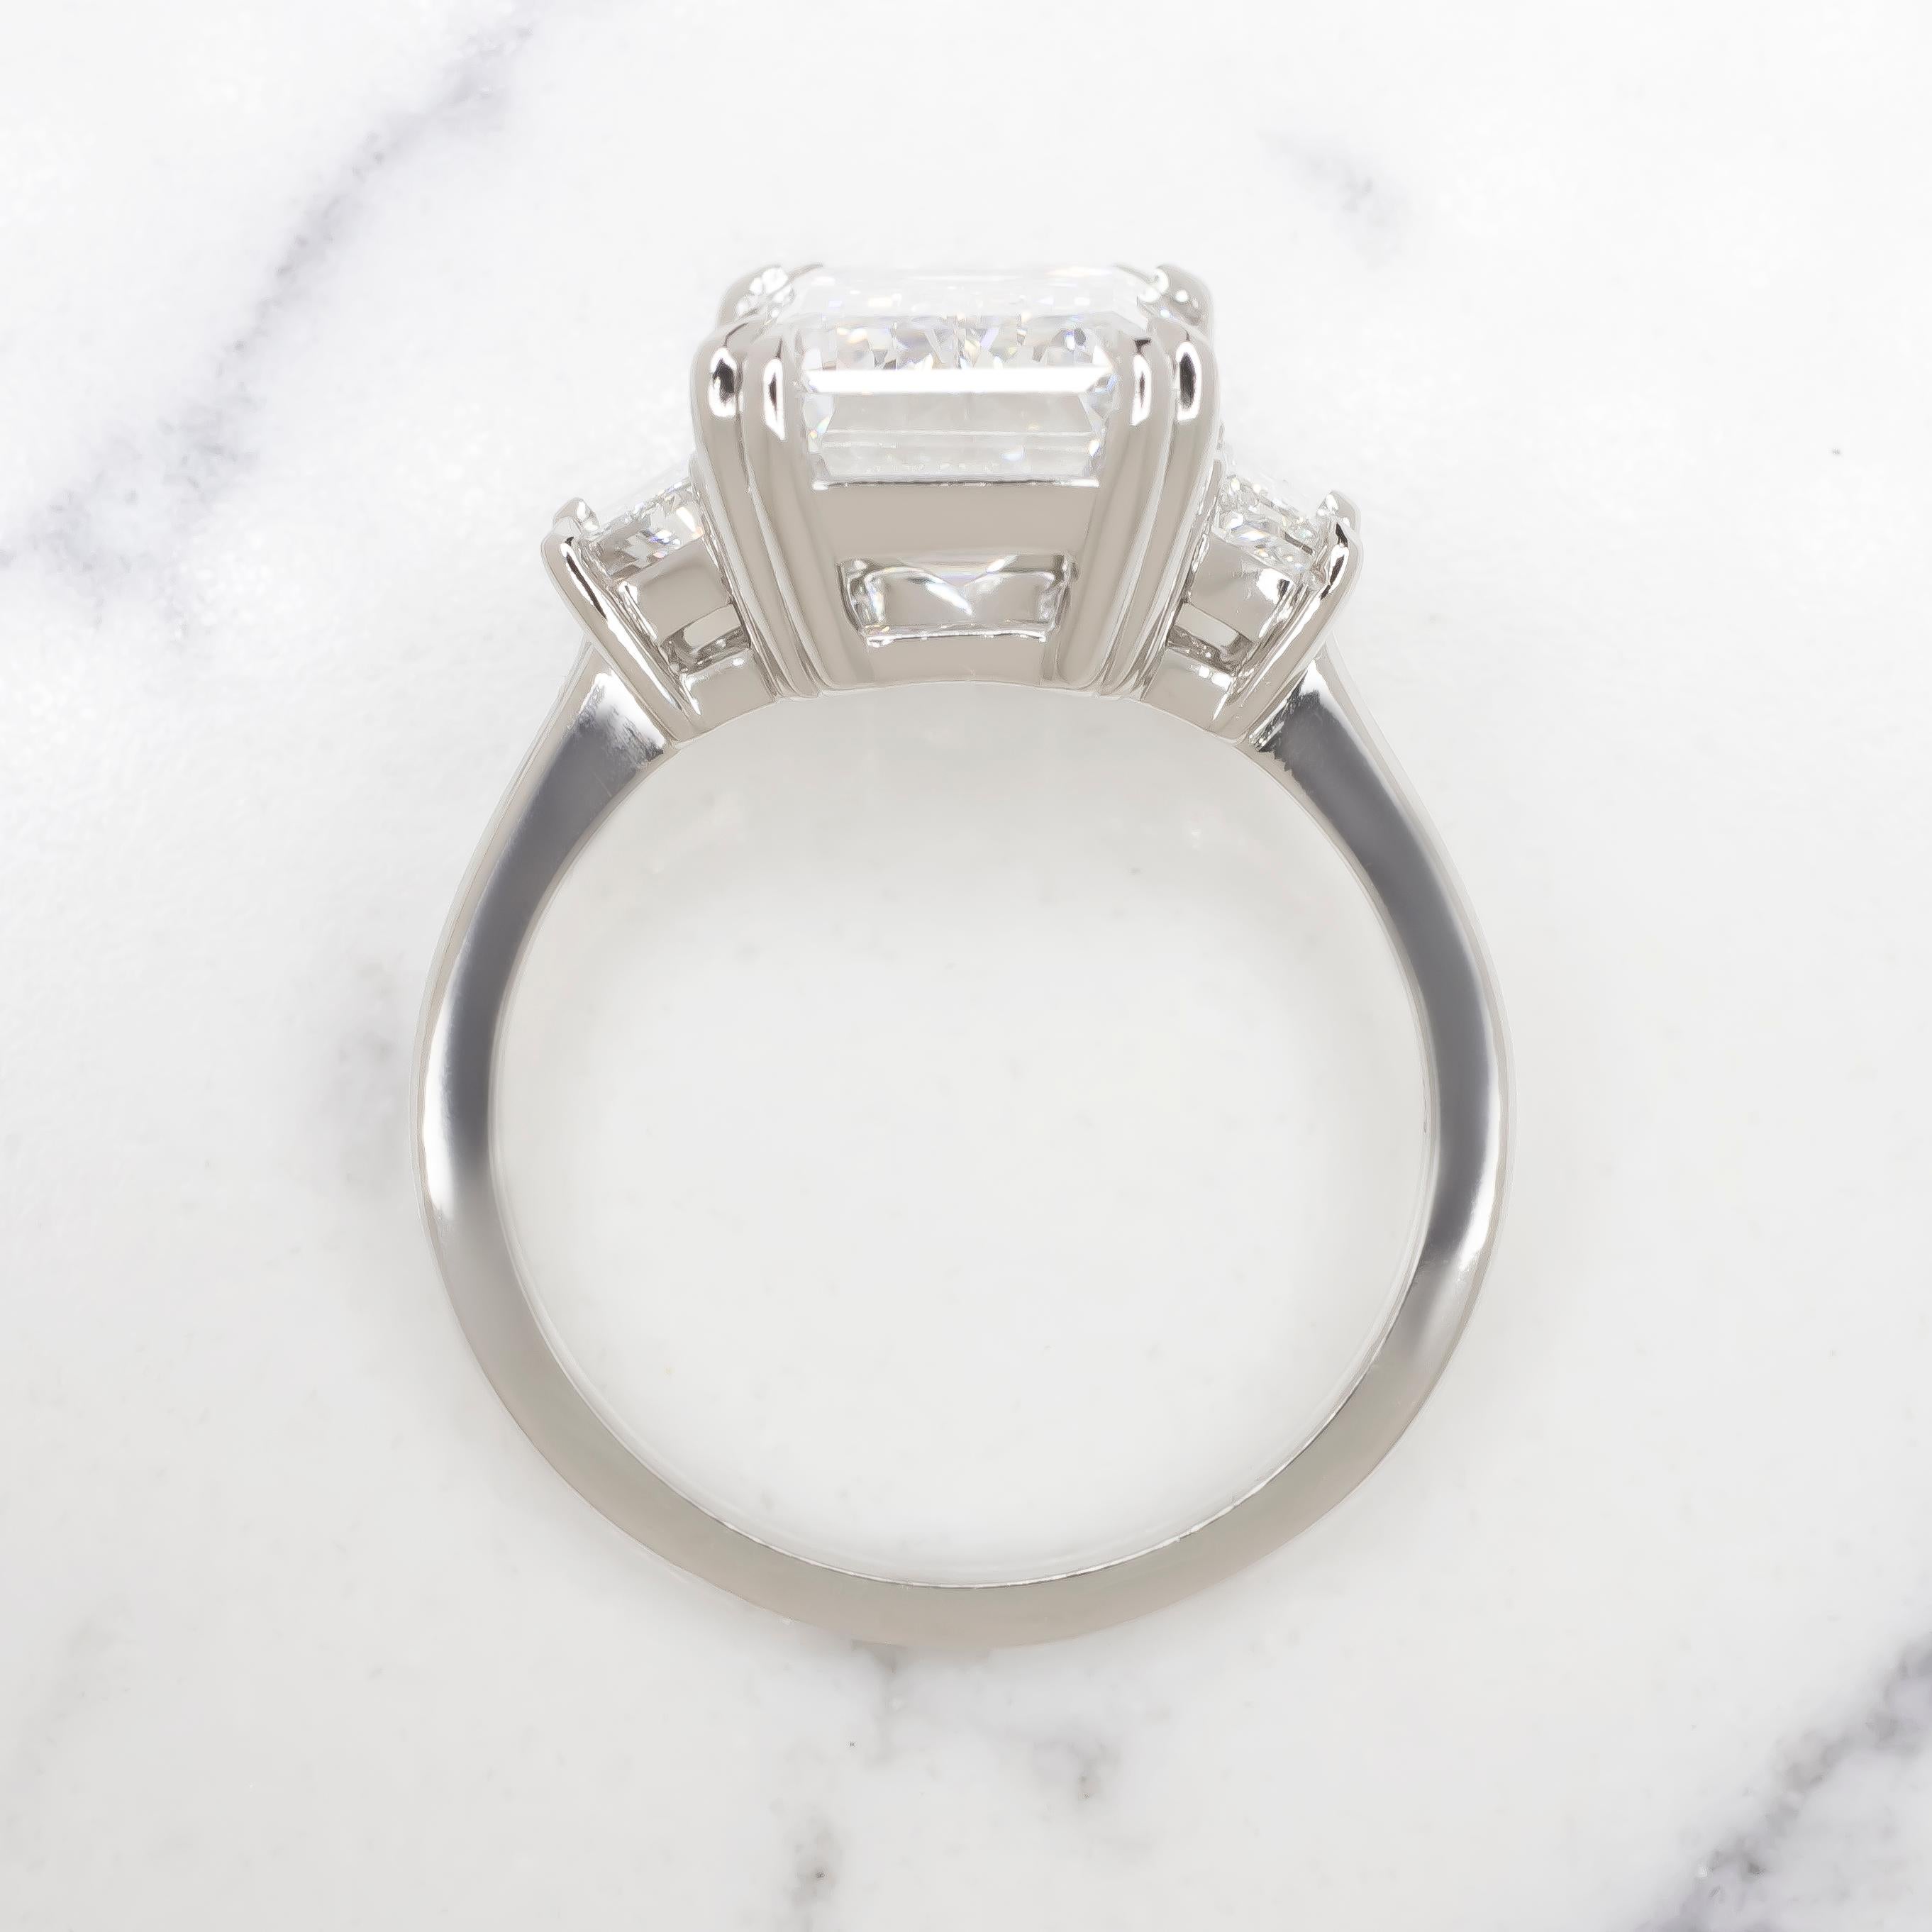 how much is a 5 carat emerald cut diamond